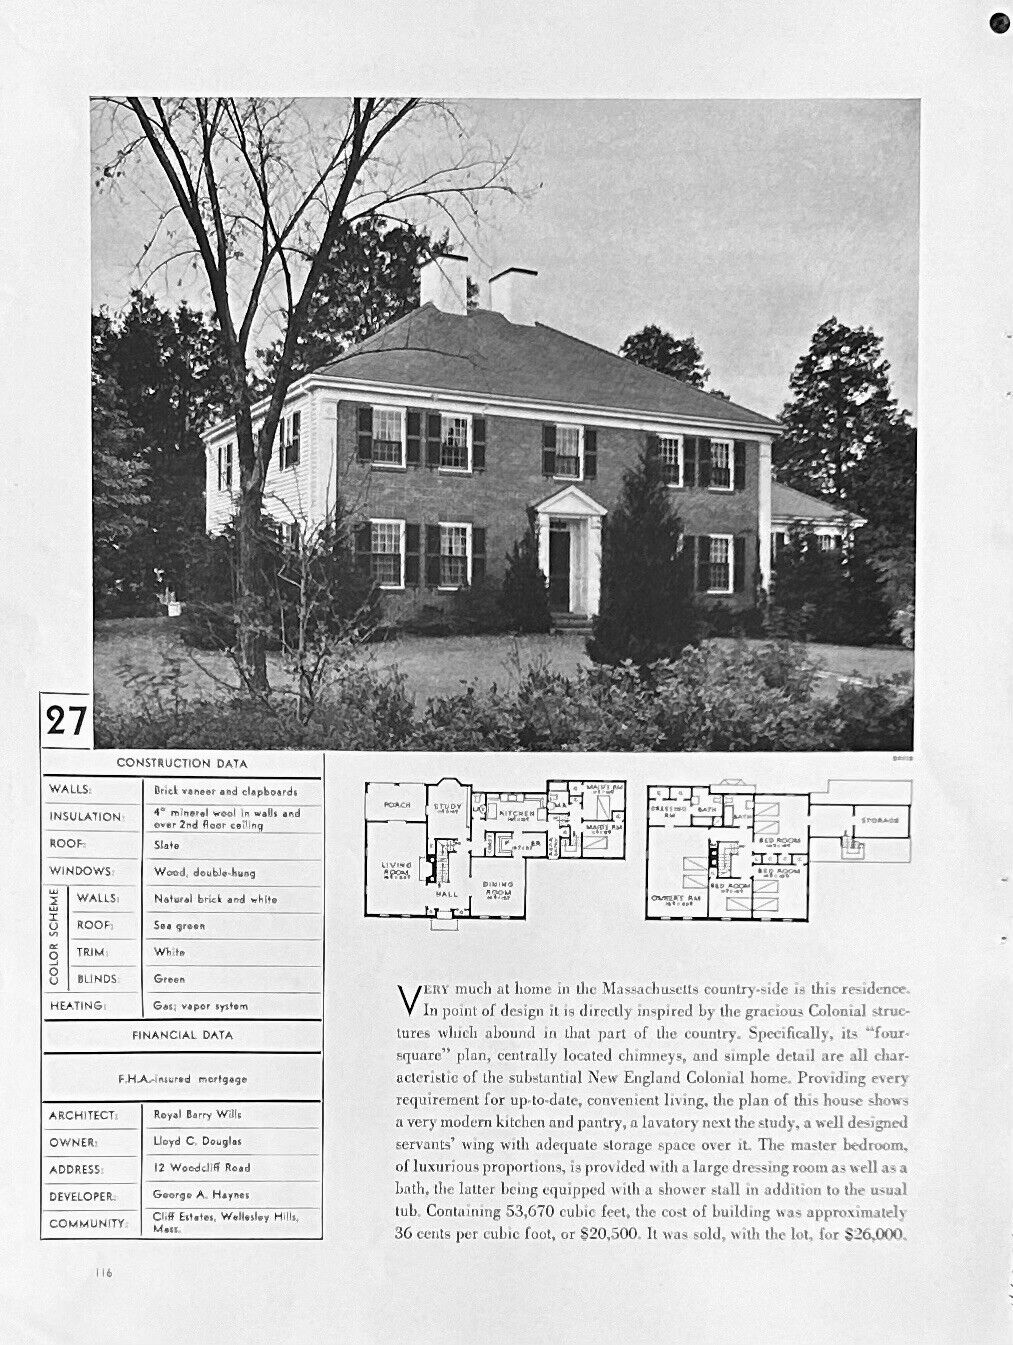 Lloyd C Douglas Home 1937 Cliff Estates 12 Woodcliff Rd Wellesley Hills MA